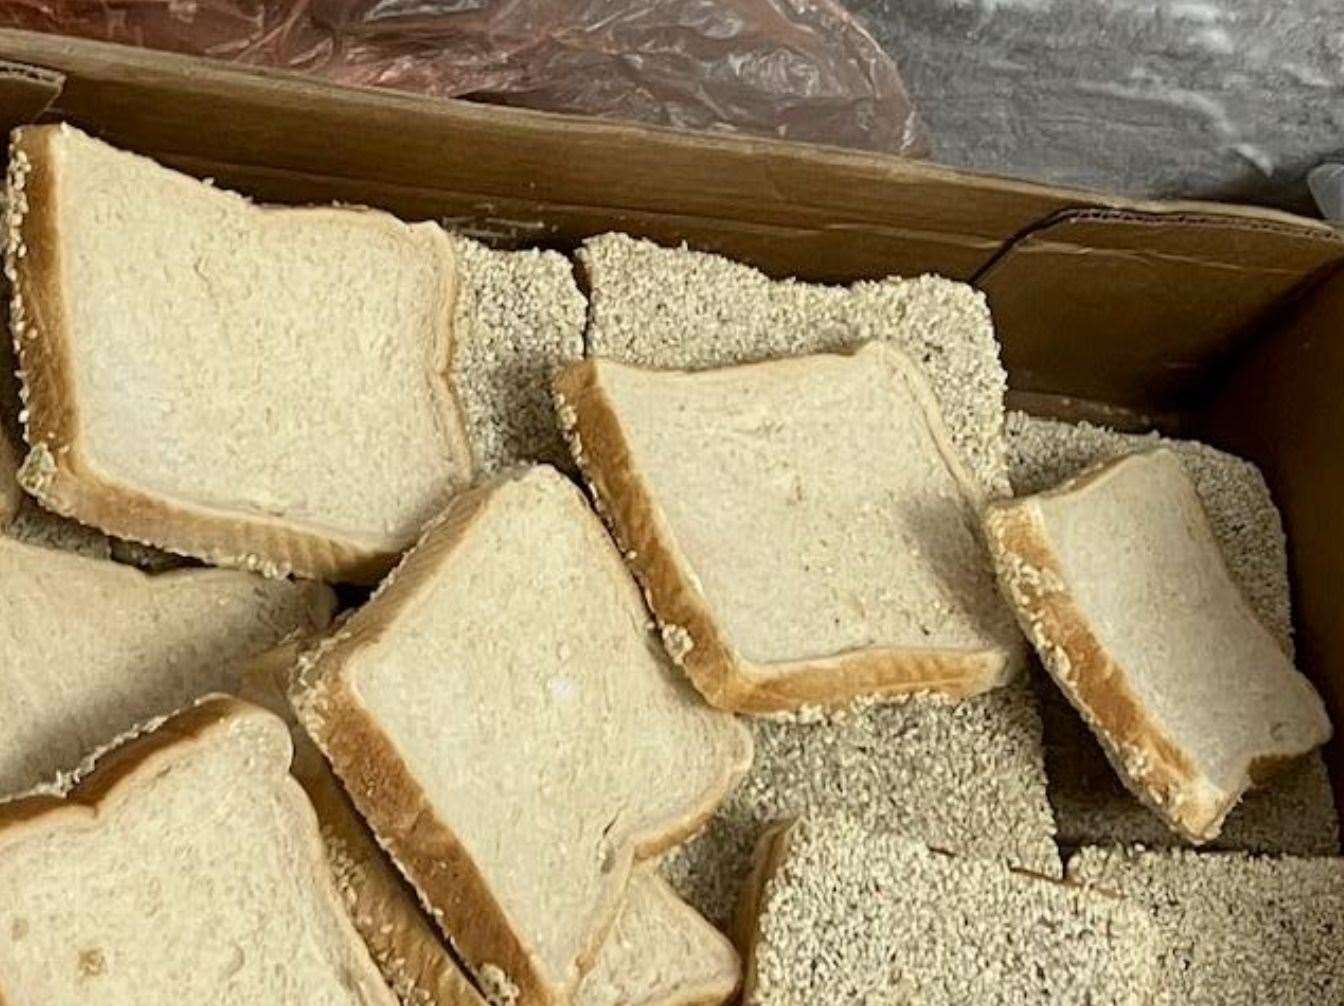 Frozen slices of bread were stored in a cardboard box